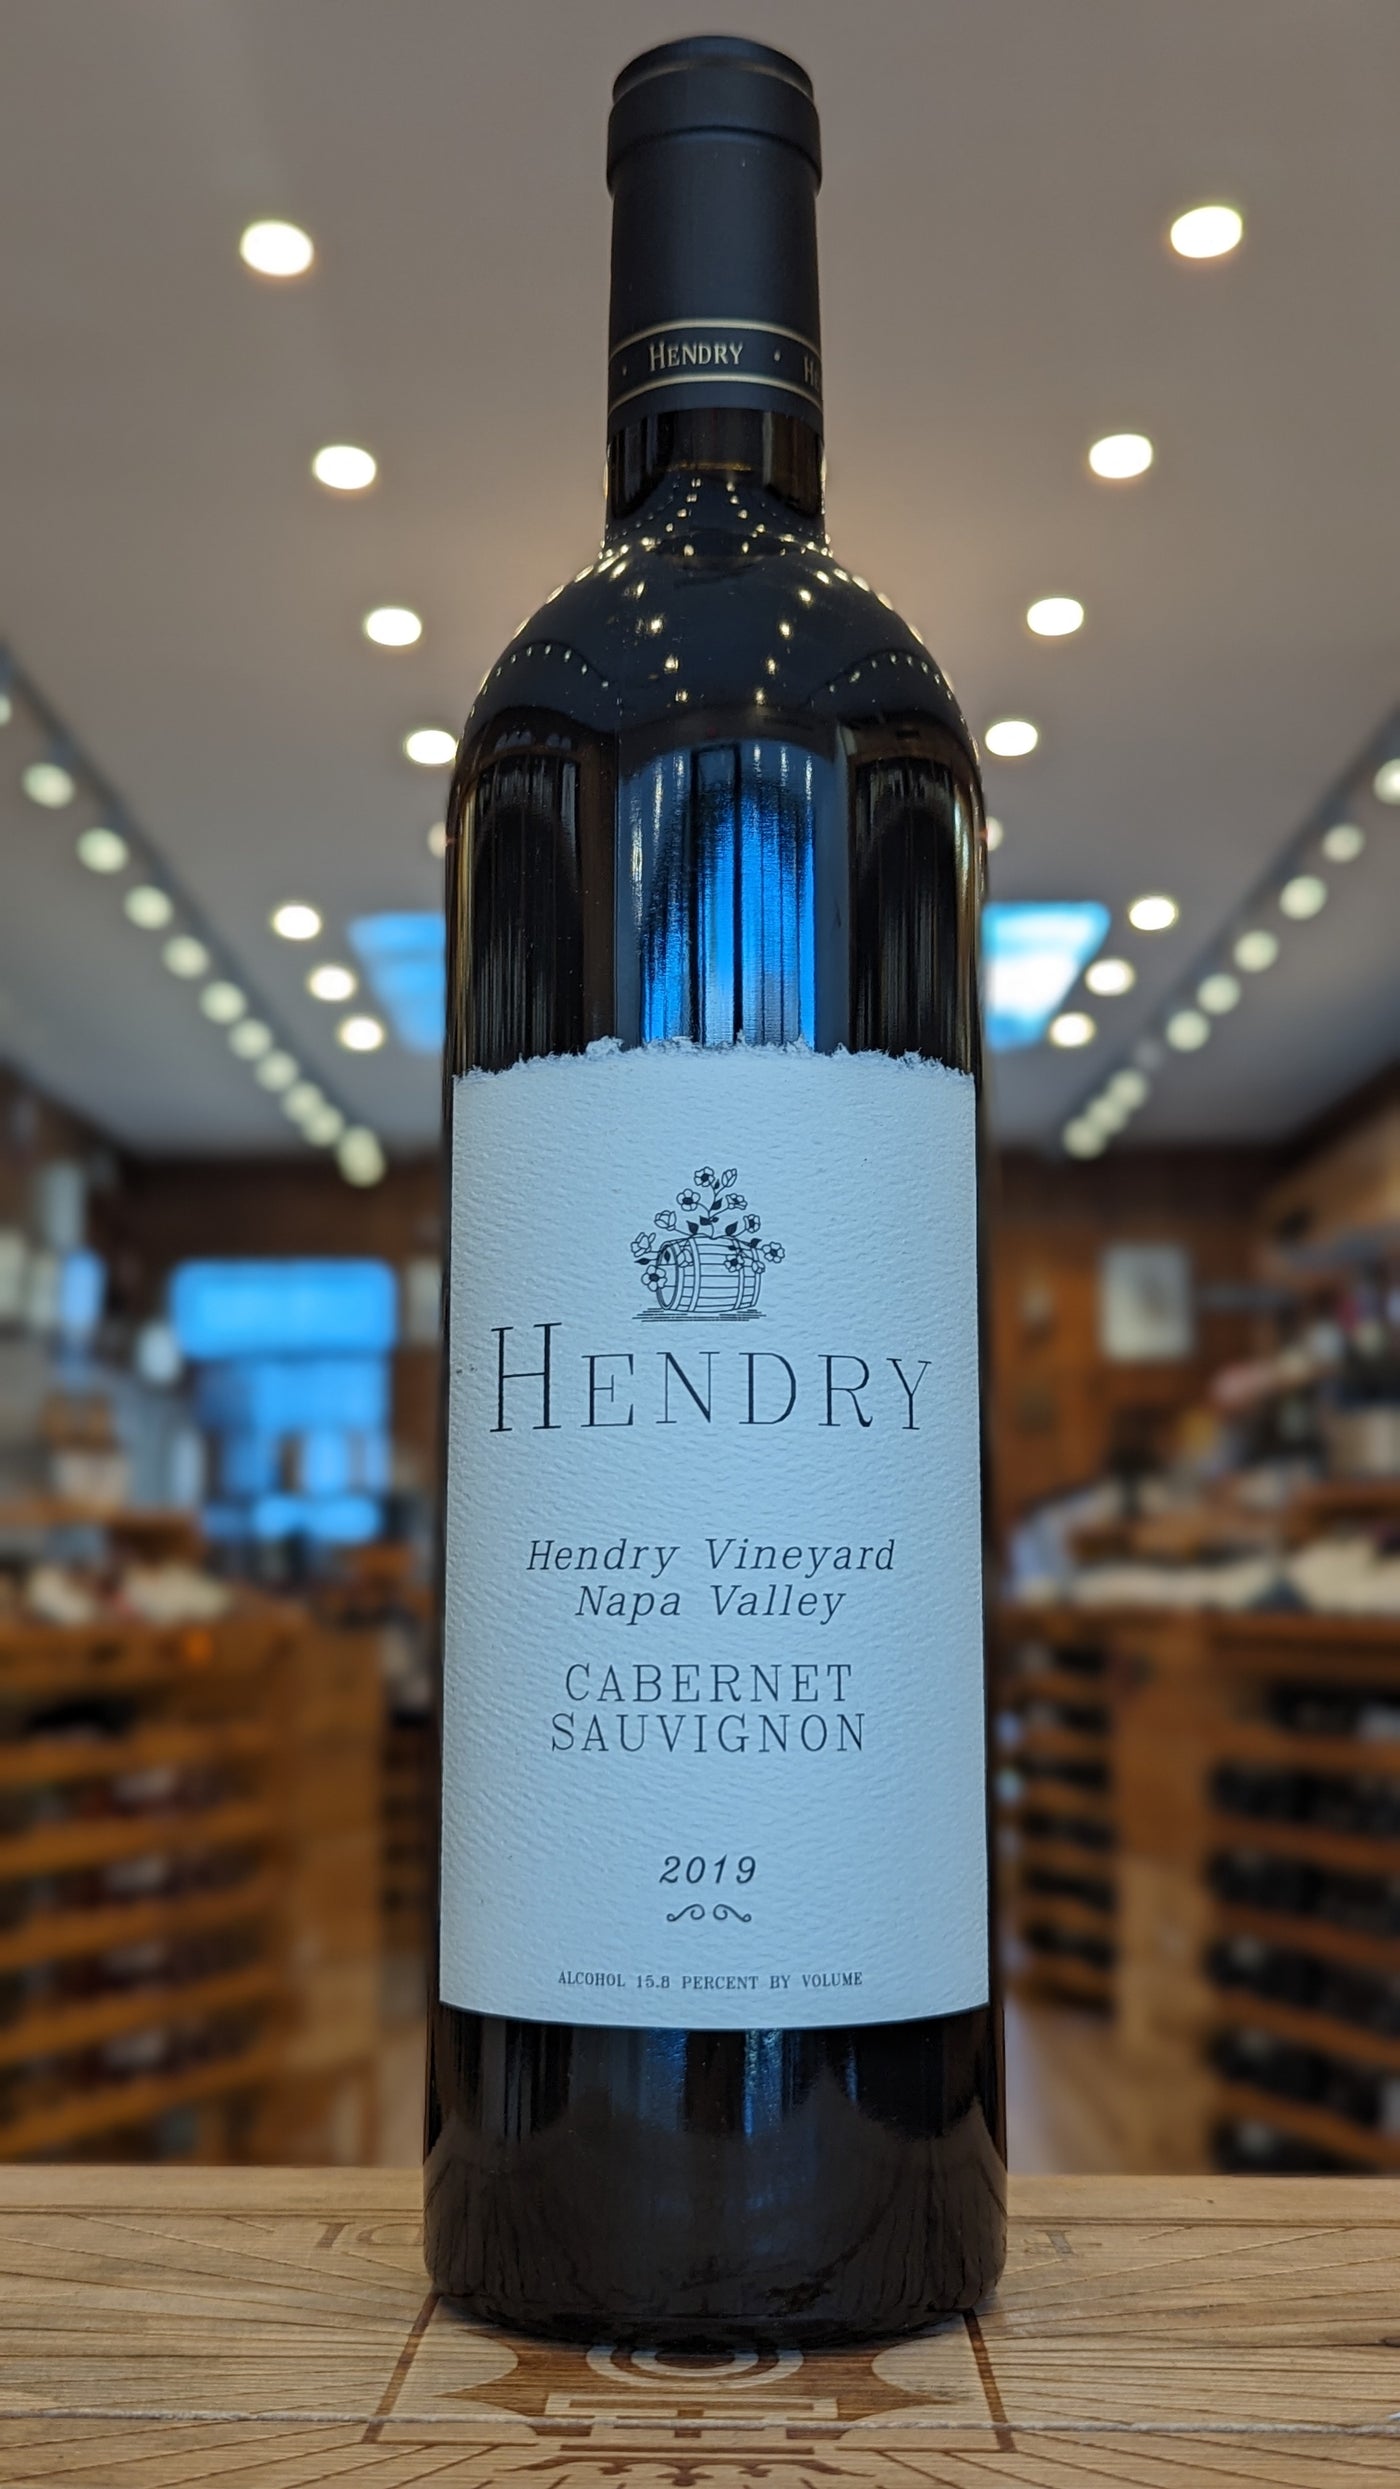 Hendry 'Hendry Vineyard' Cabernet Sauvignon 2019